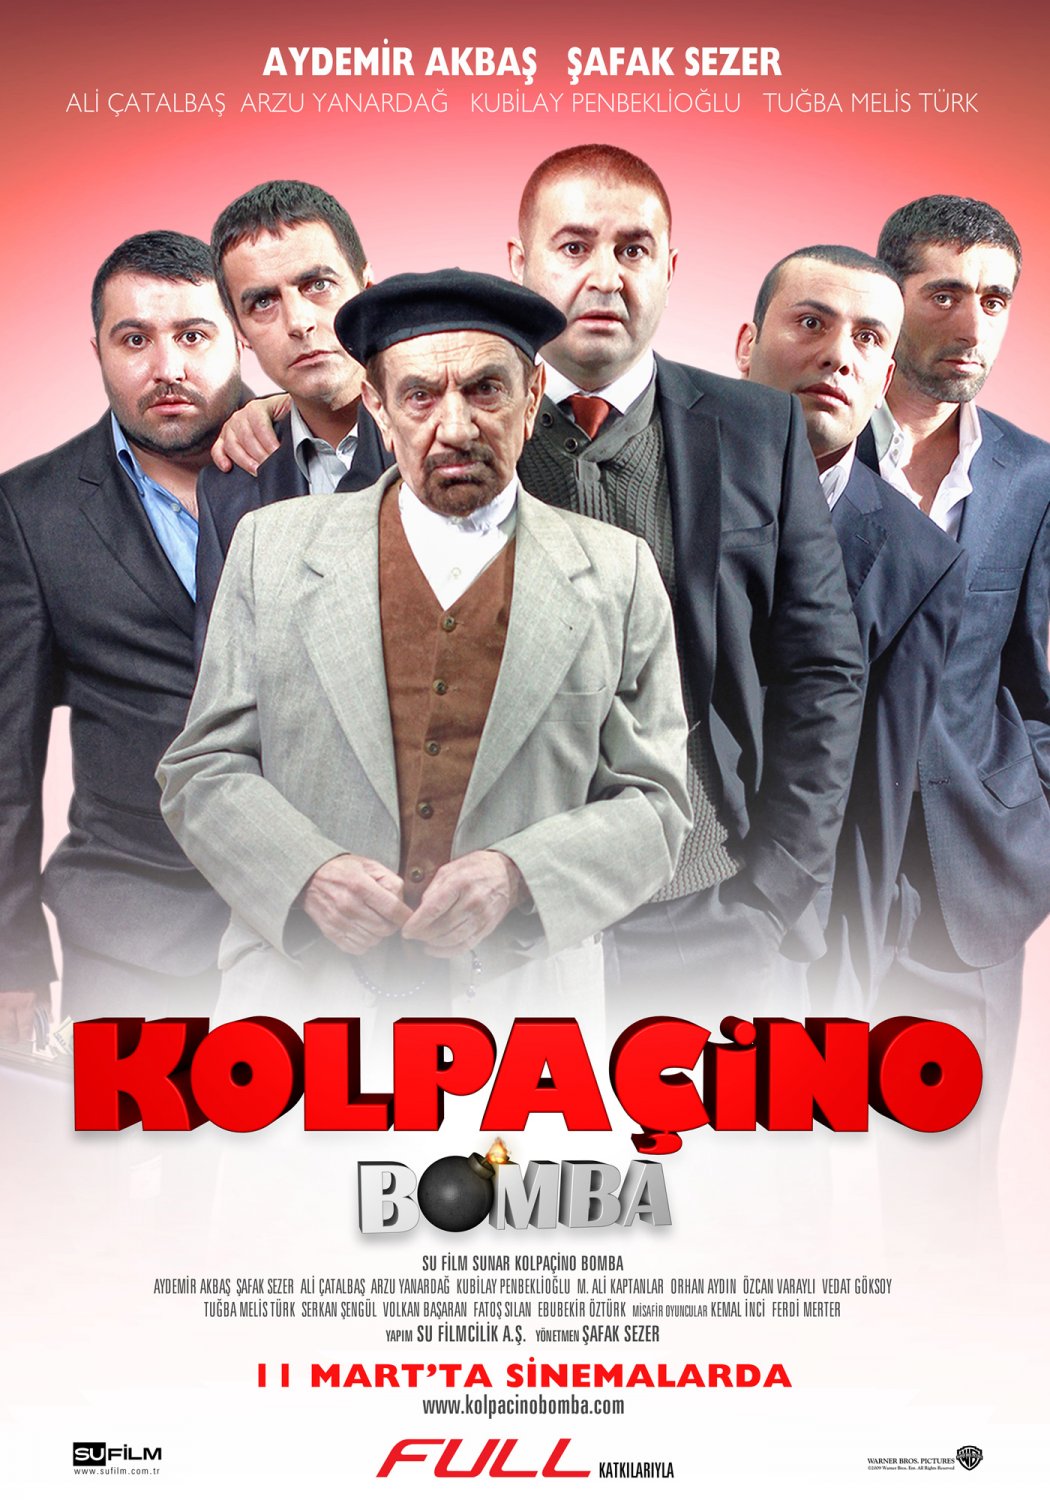 Extra Large Movie Poster Image for Kolpaçino Bomba (#2 of 3)